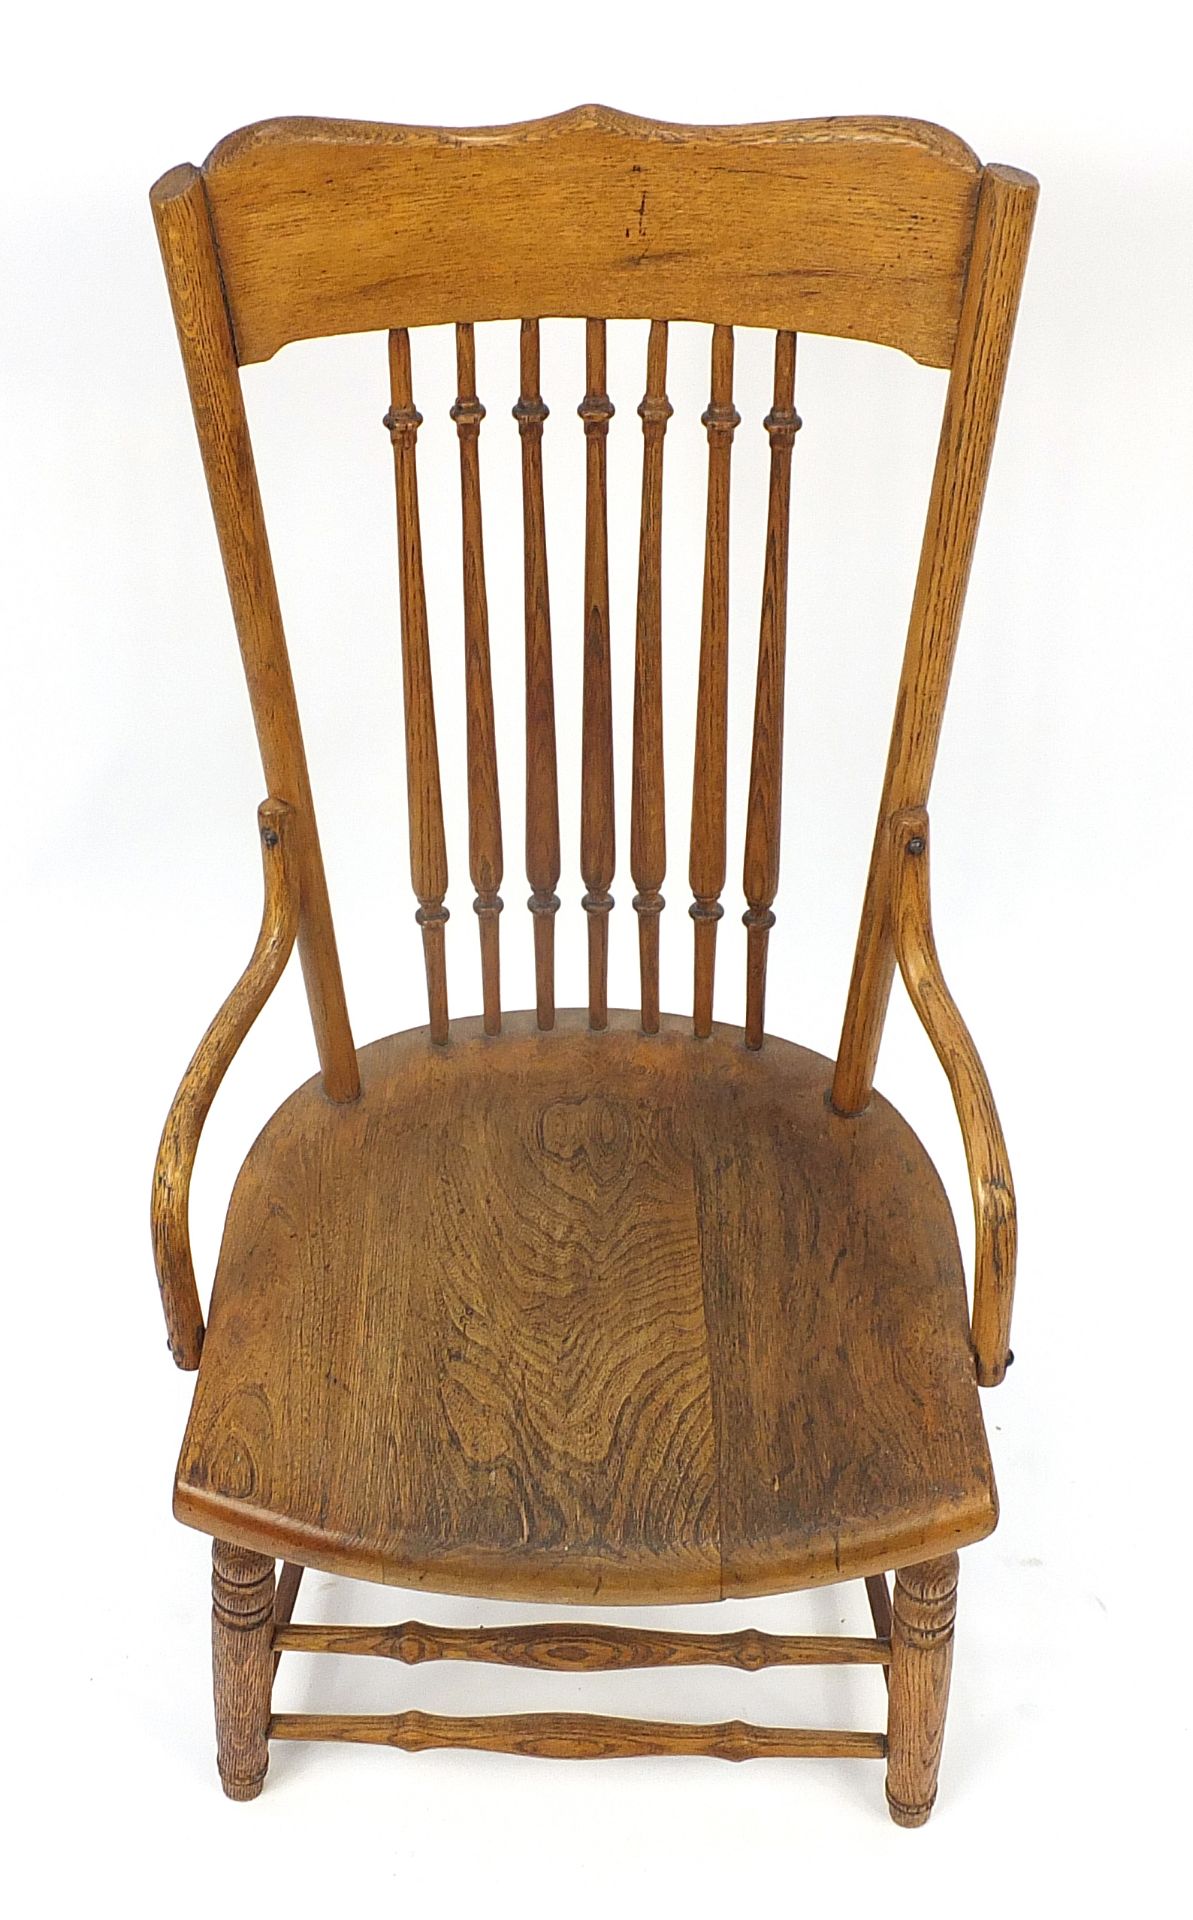 Antique elm stick back chair, 91cm high - Image 3 of 4